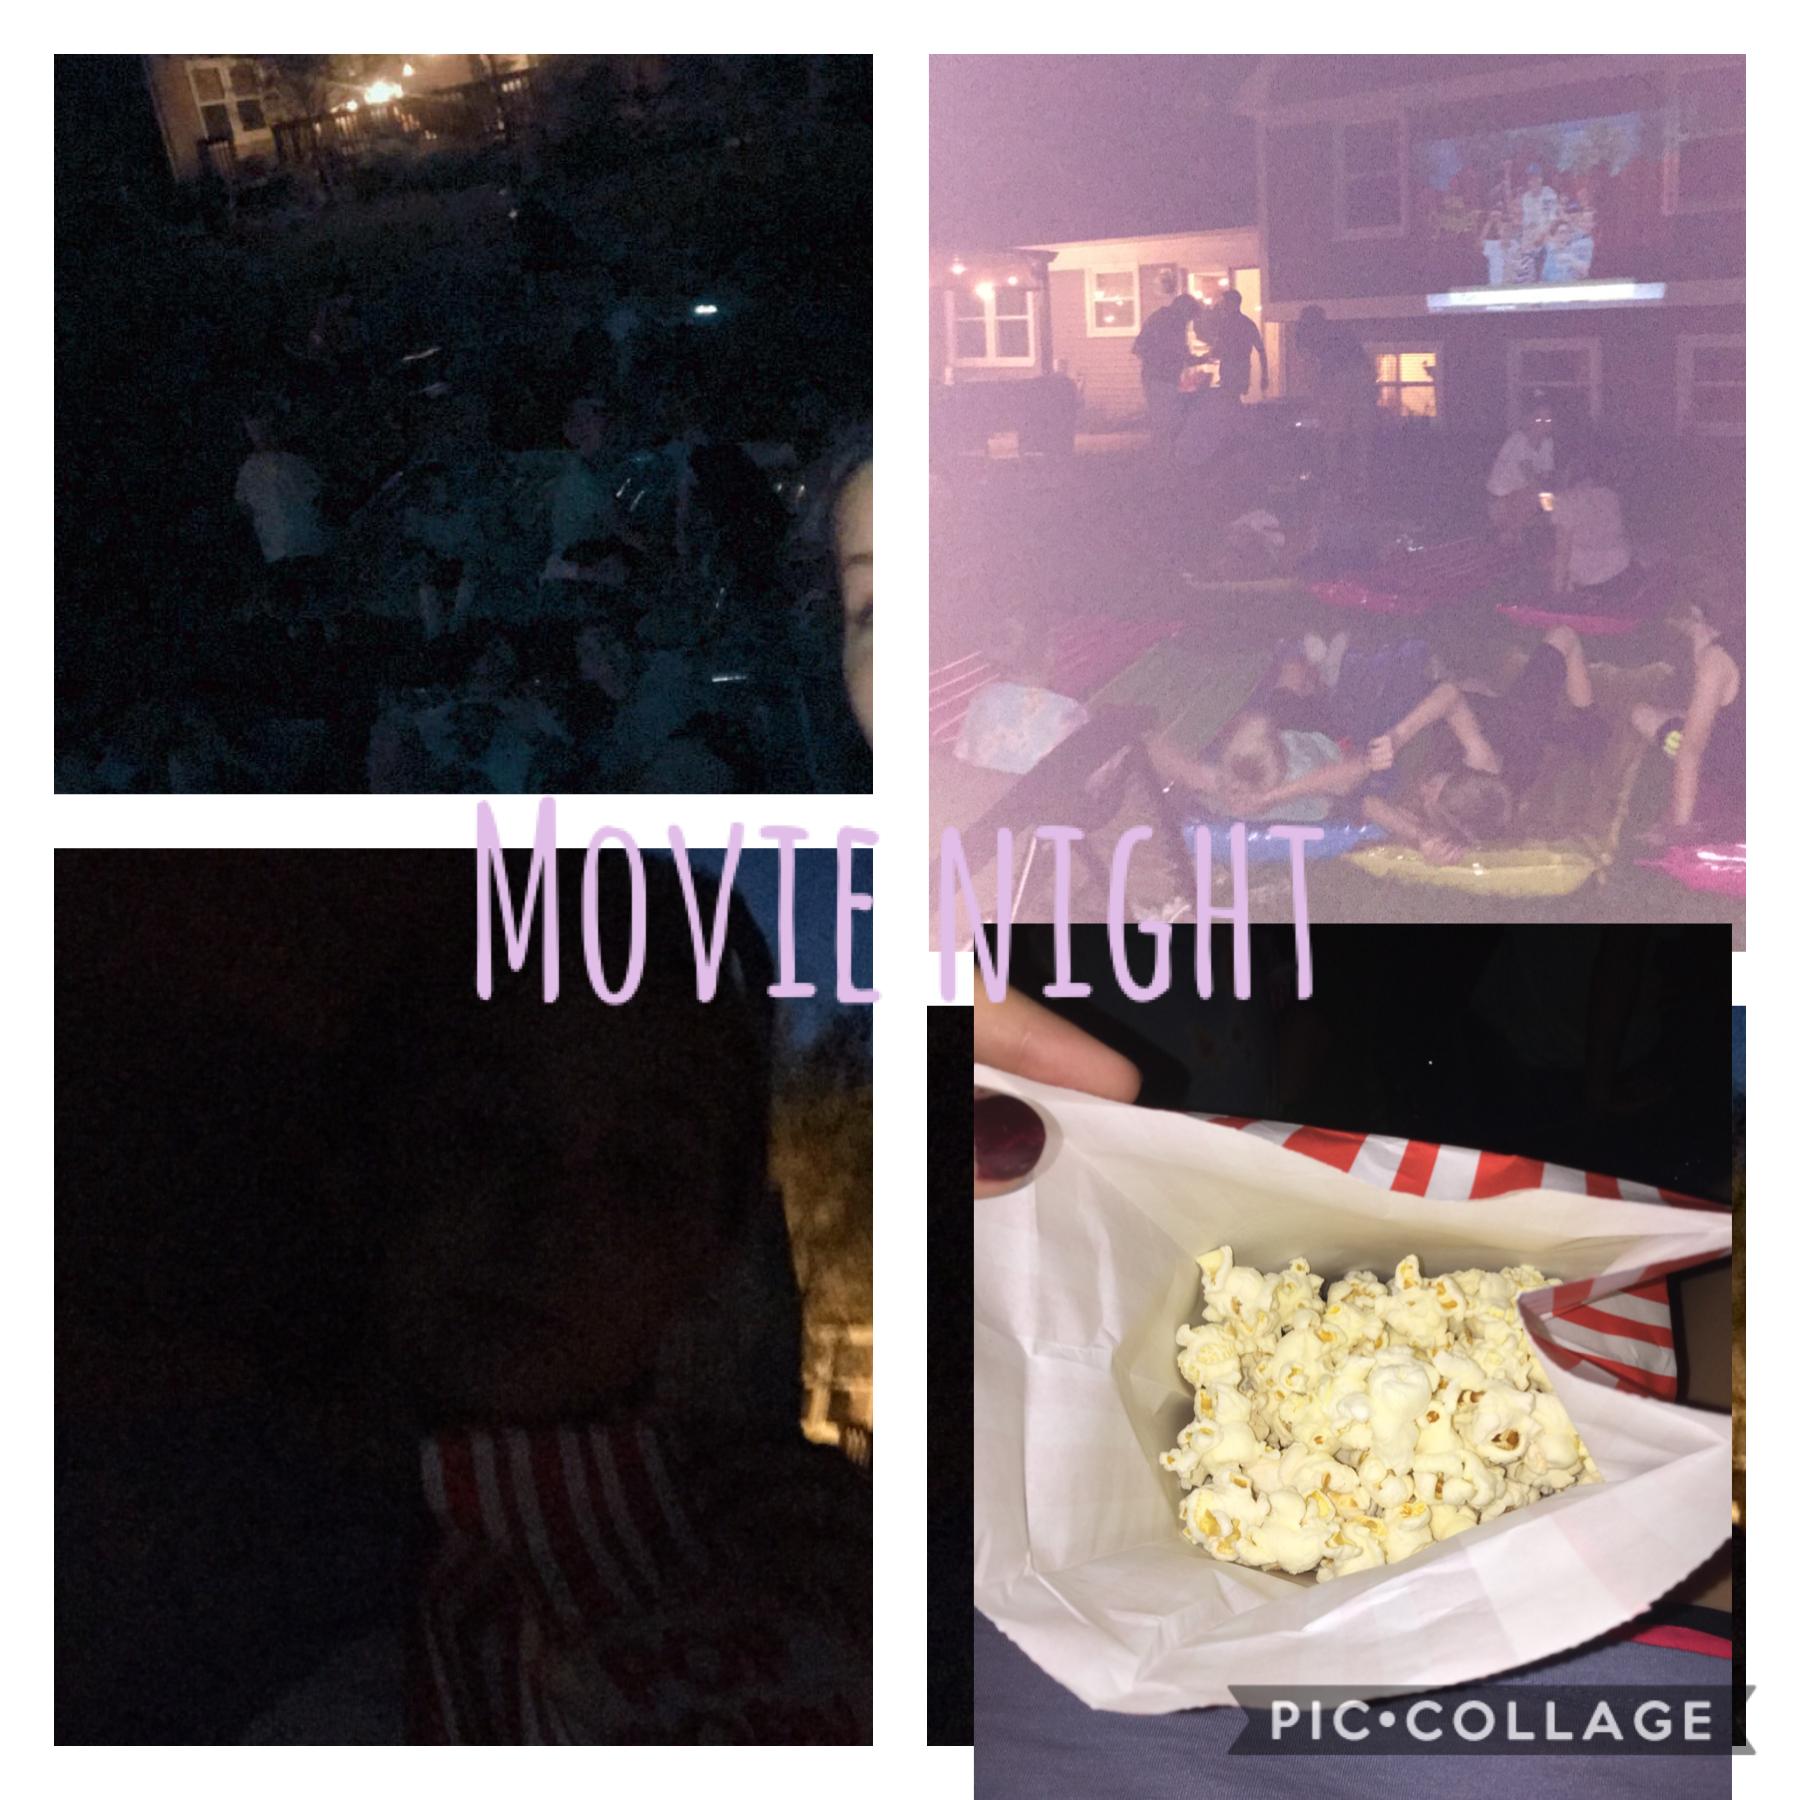 Movie night in the neighbor hood


Pls like and follow 